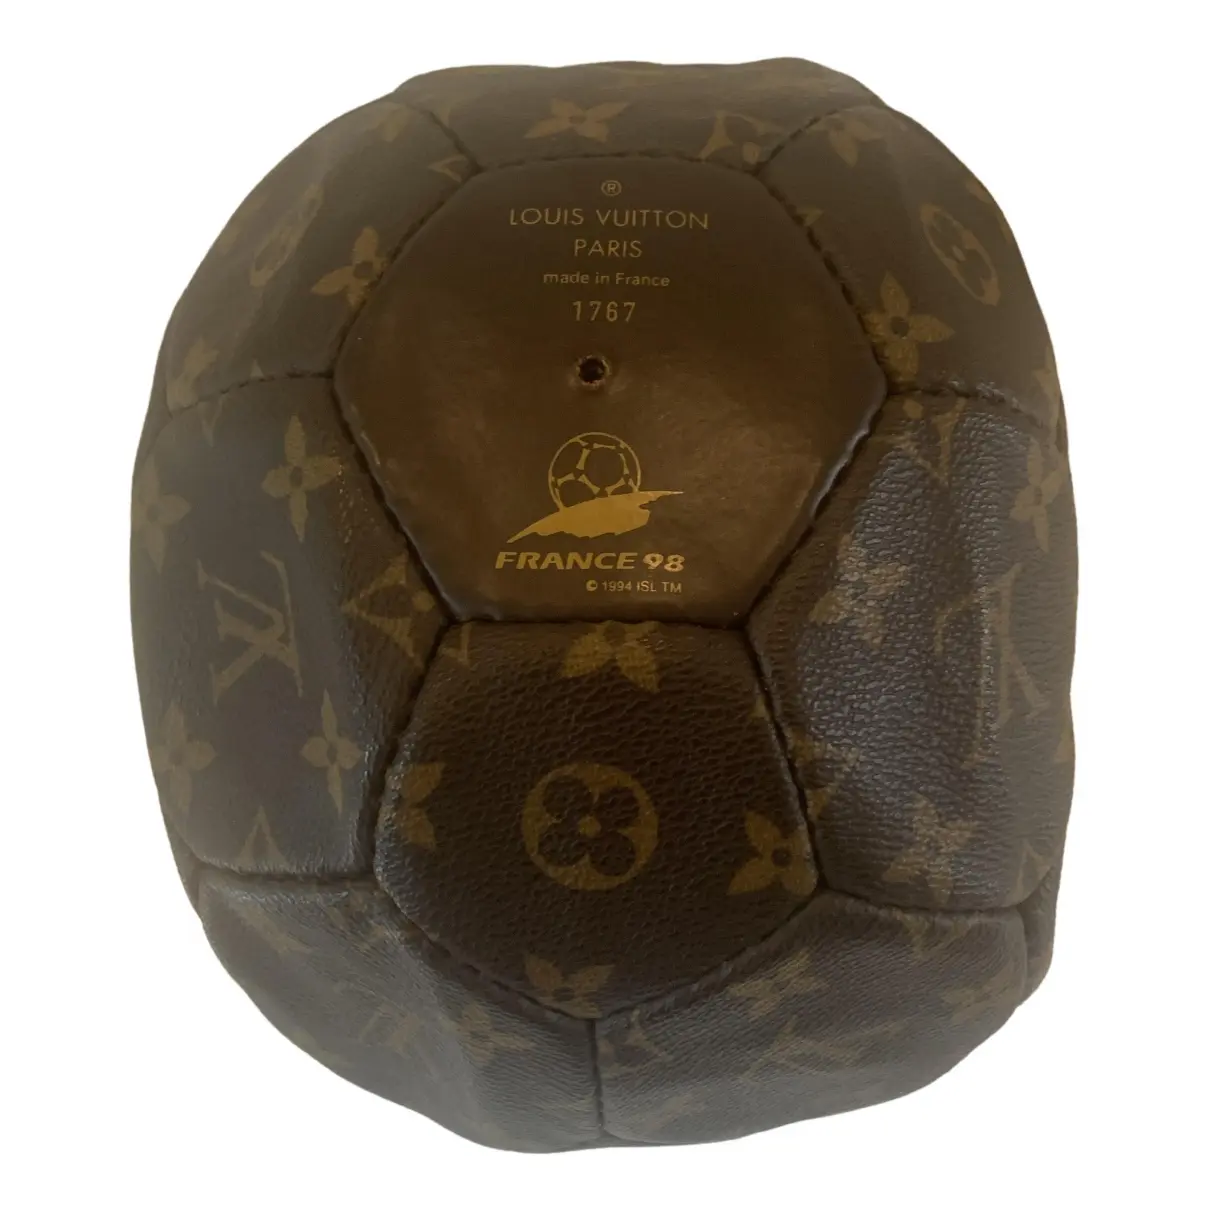 Leather sport ball Louis Vuitton - Vintage